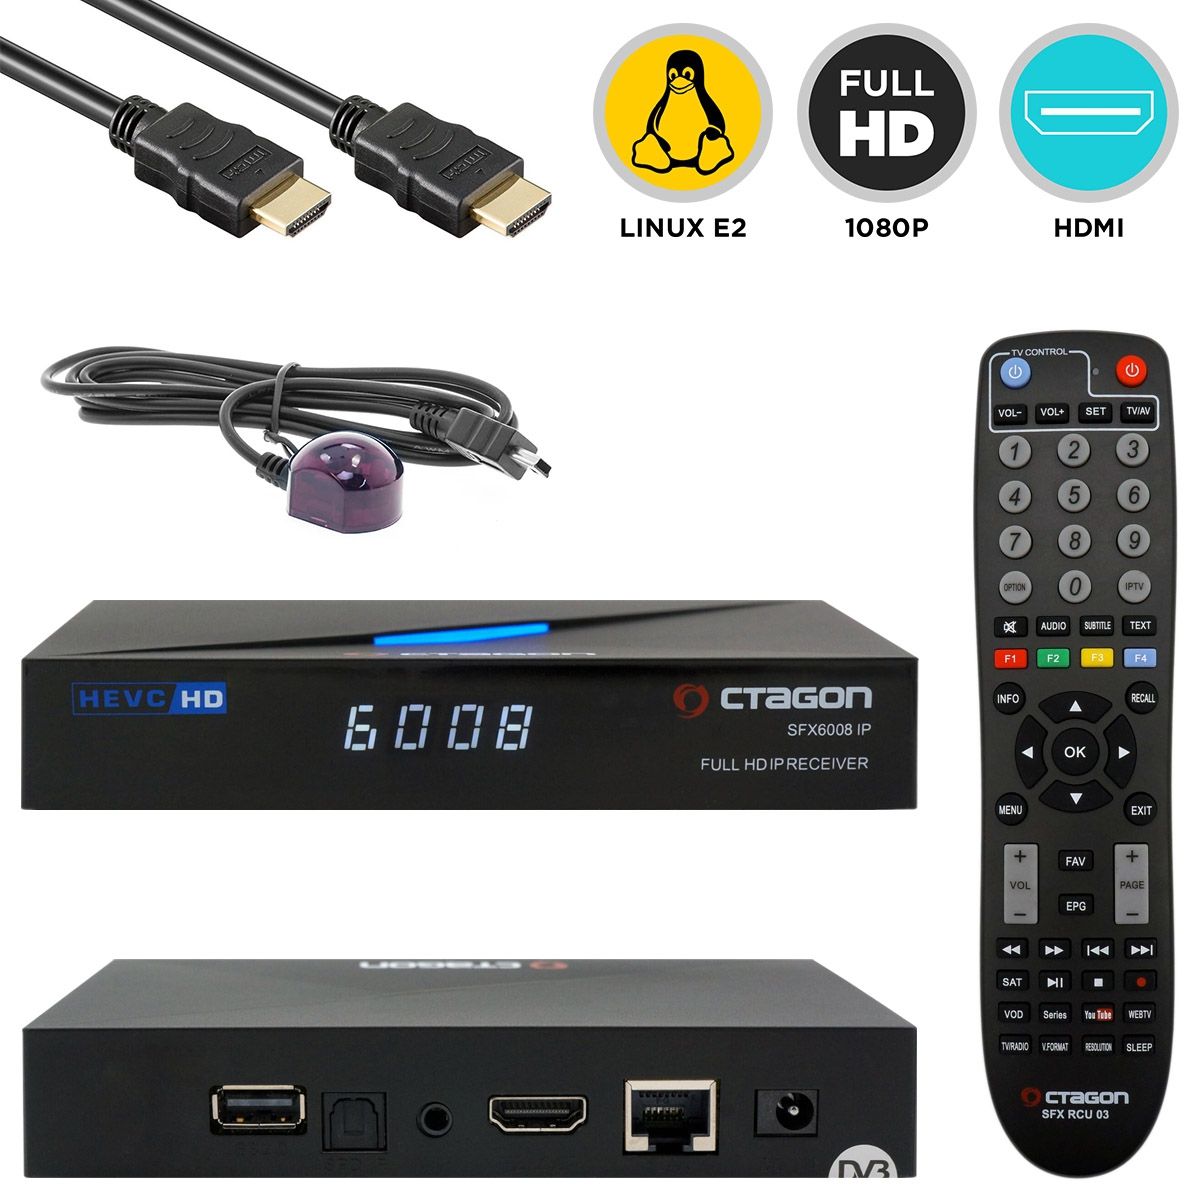 Octagon SFX6008 IP WL Full HD IP-Receiver (Linux E2 & Define OS, 1080p, HDMI, USB, LAN, WiFi) von Octagon